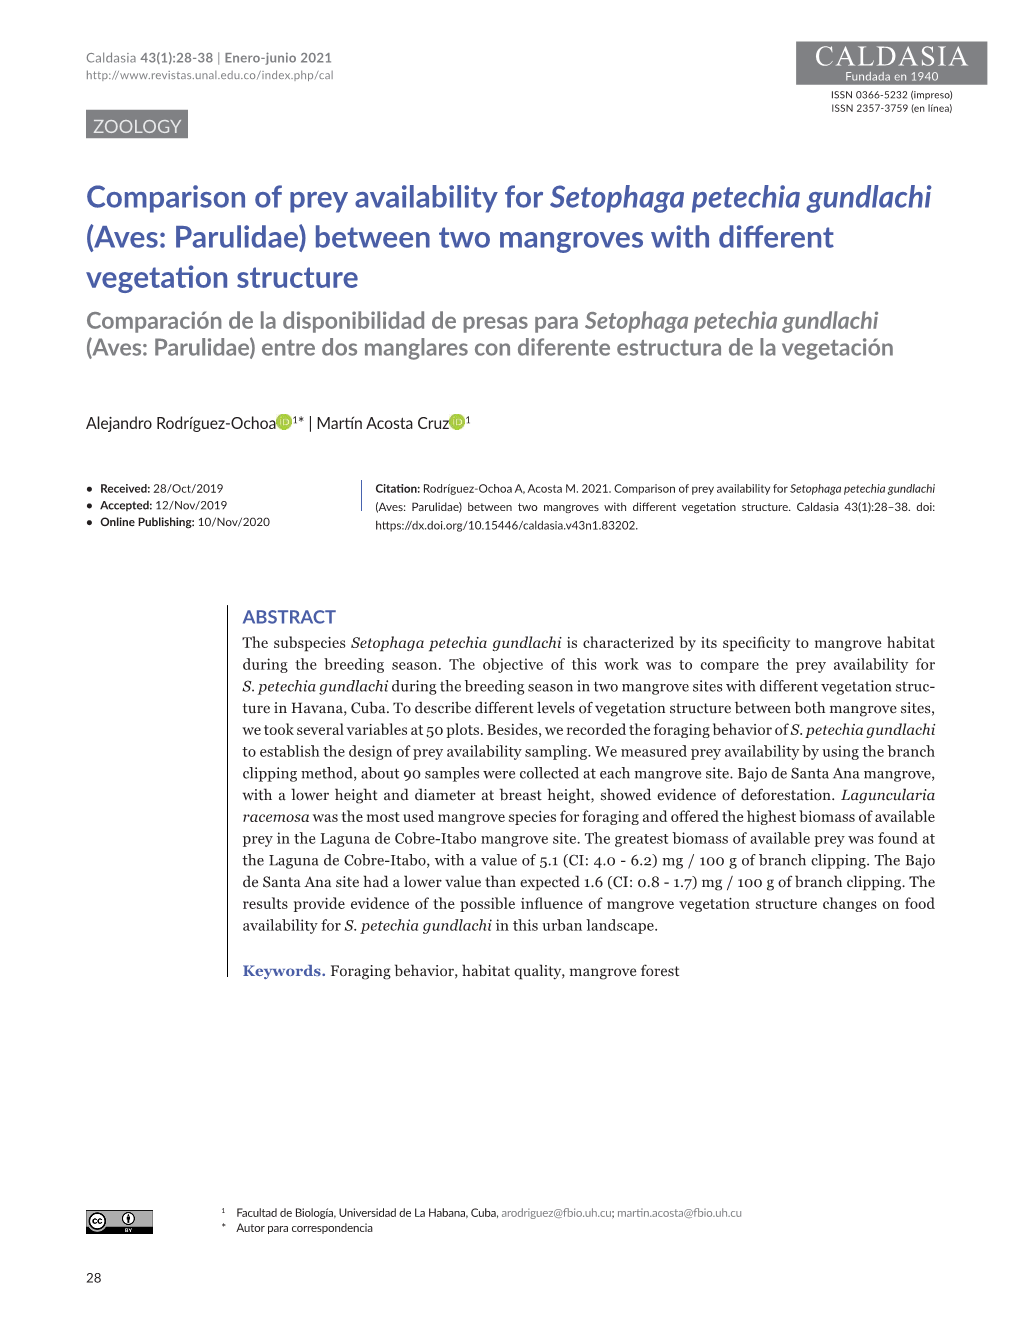 Comparison of Prey Availability for Setophaga Petechia Gundlachi